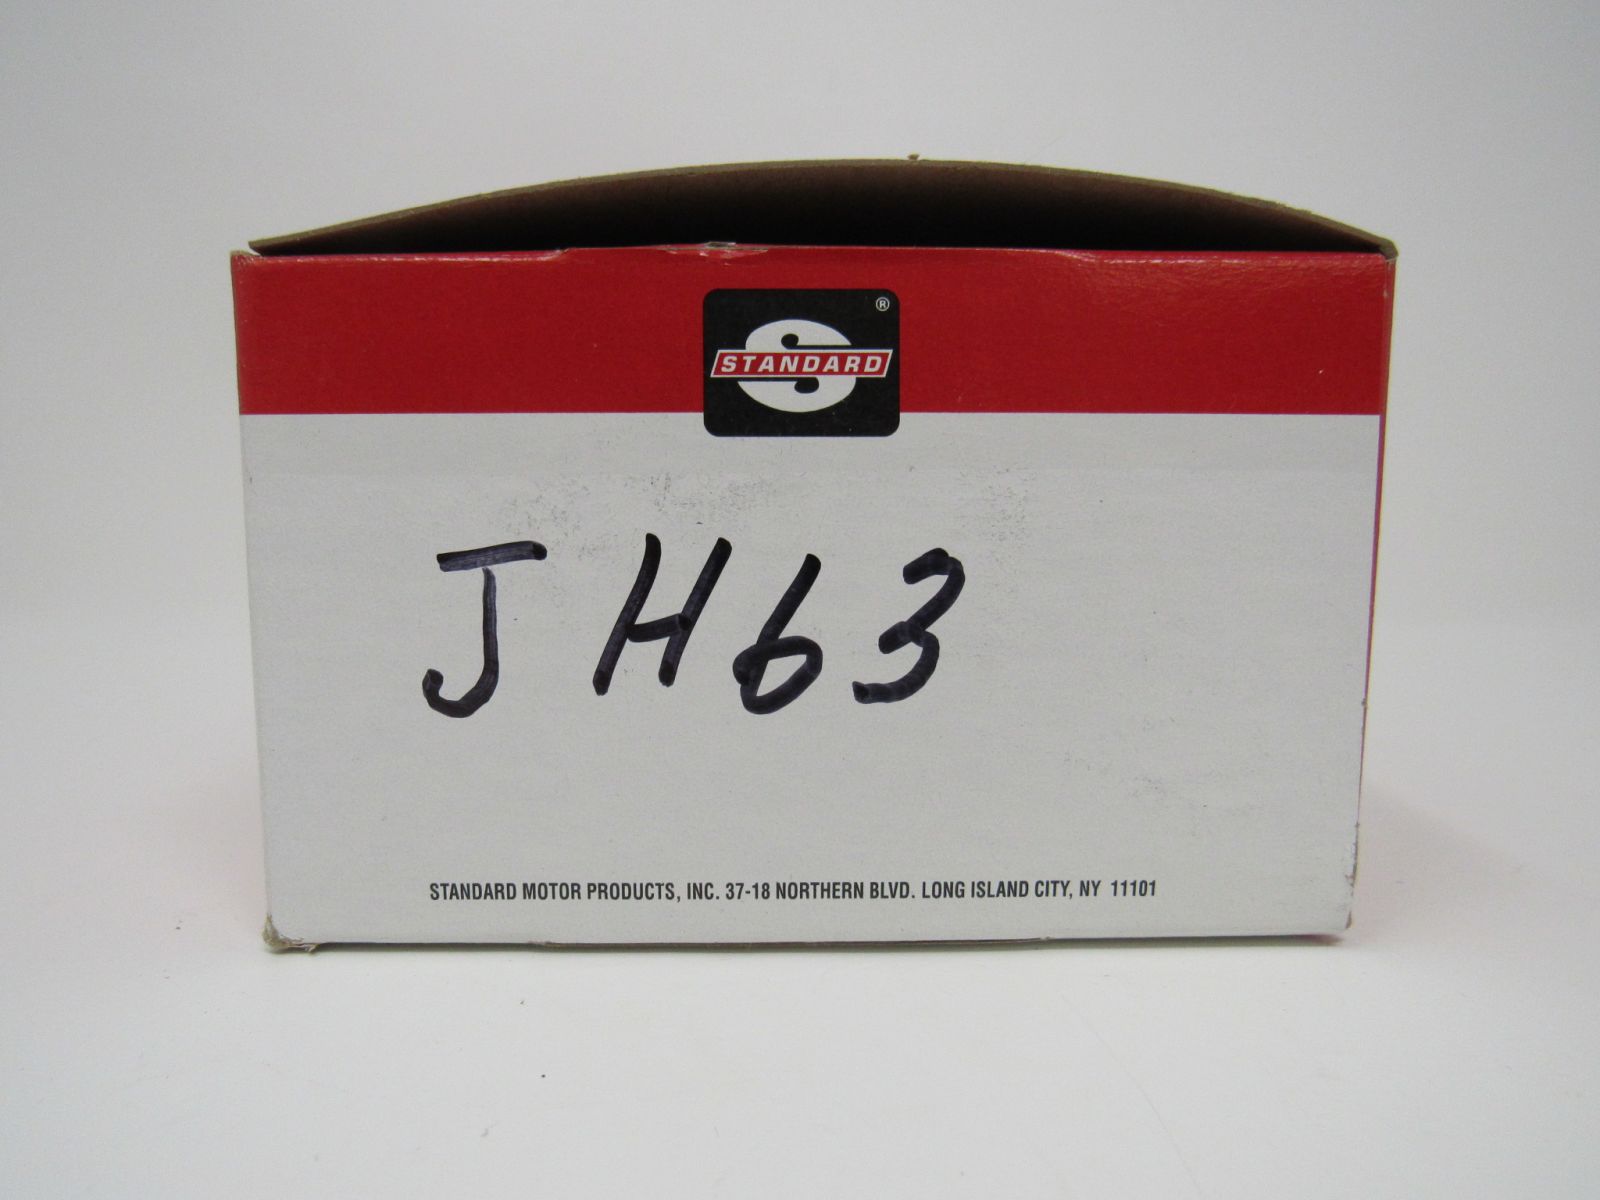 Standard Distributor Ignition Cap 4 Cylinder JH63 -- New